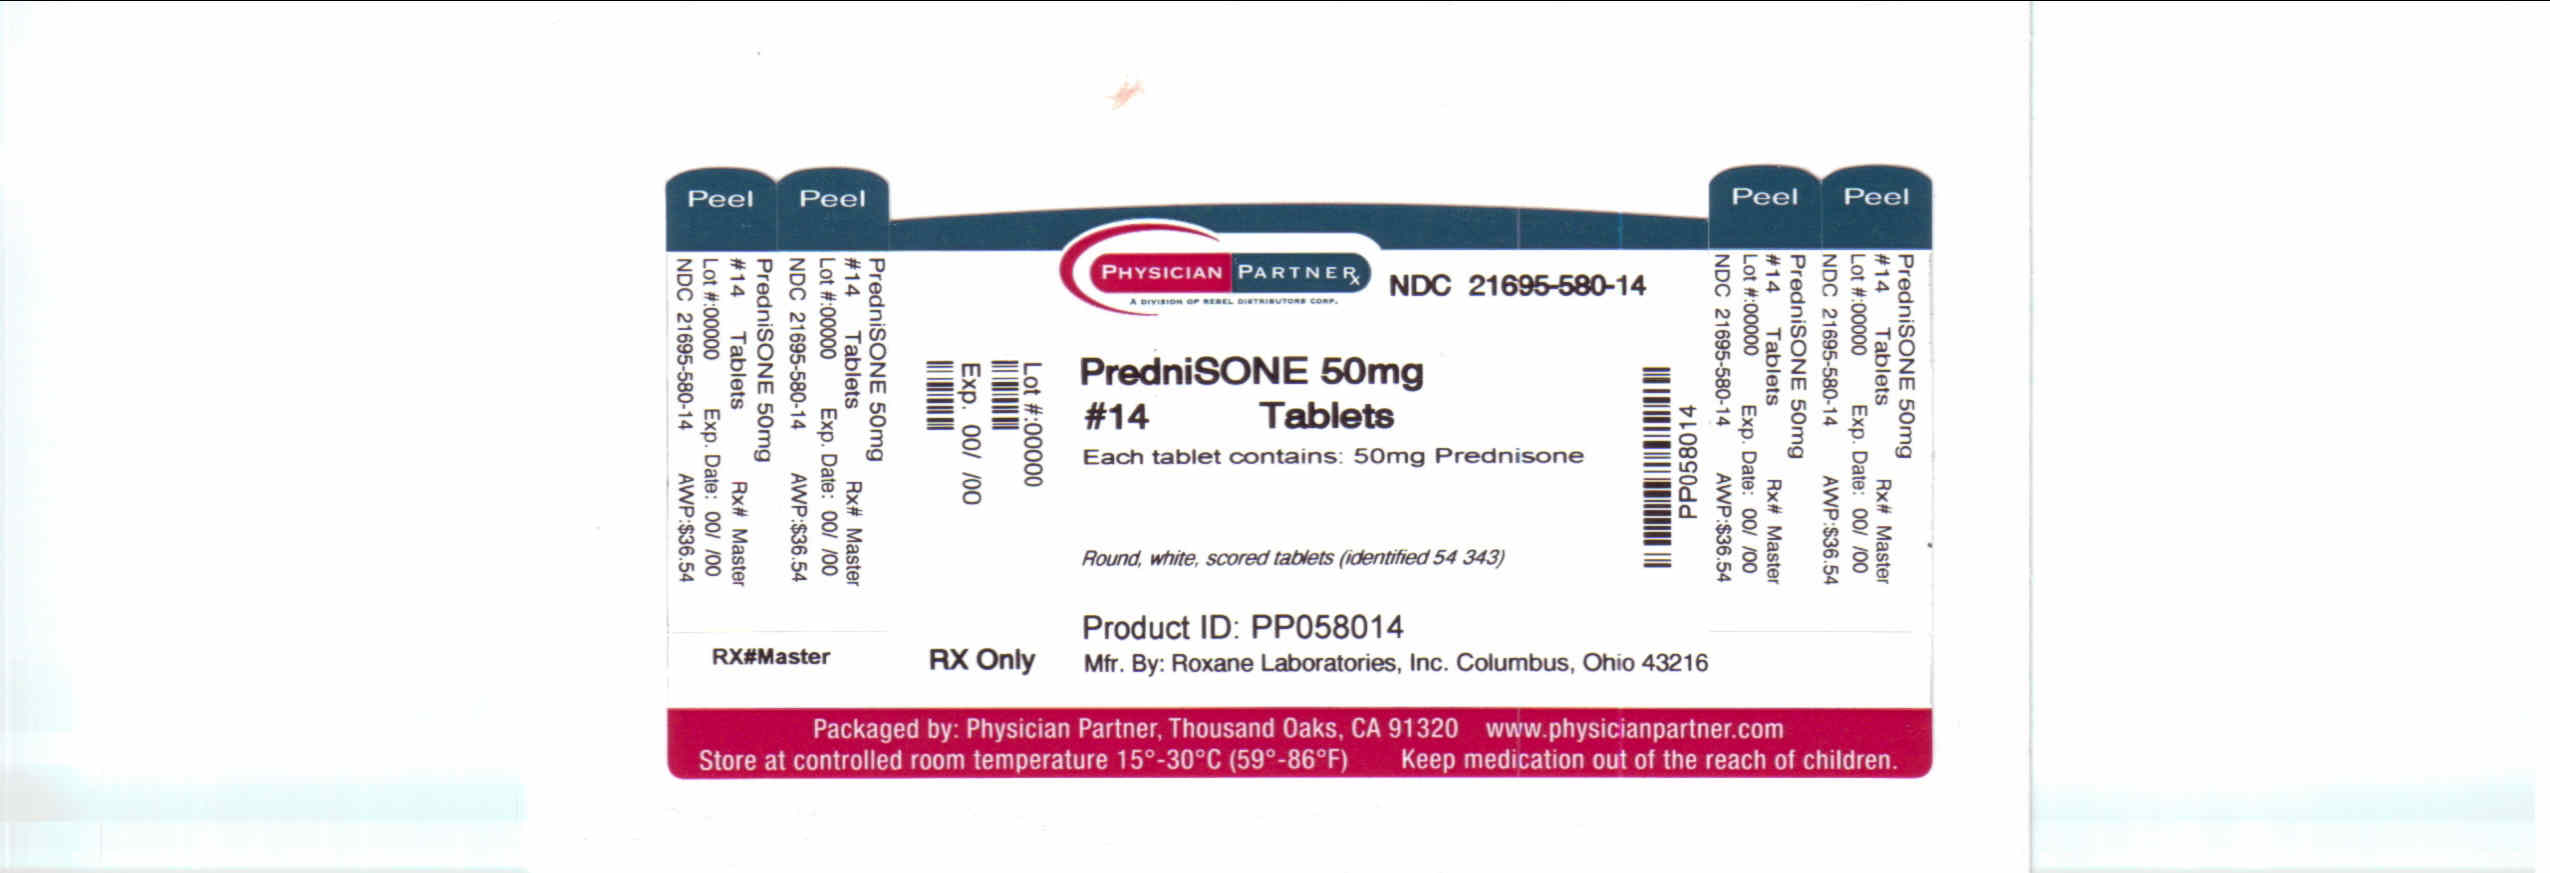 PredniSONE 50 mg